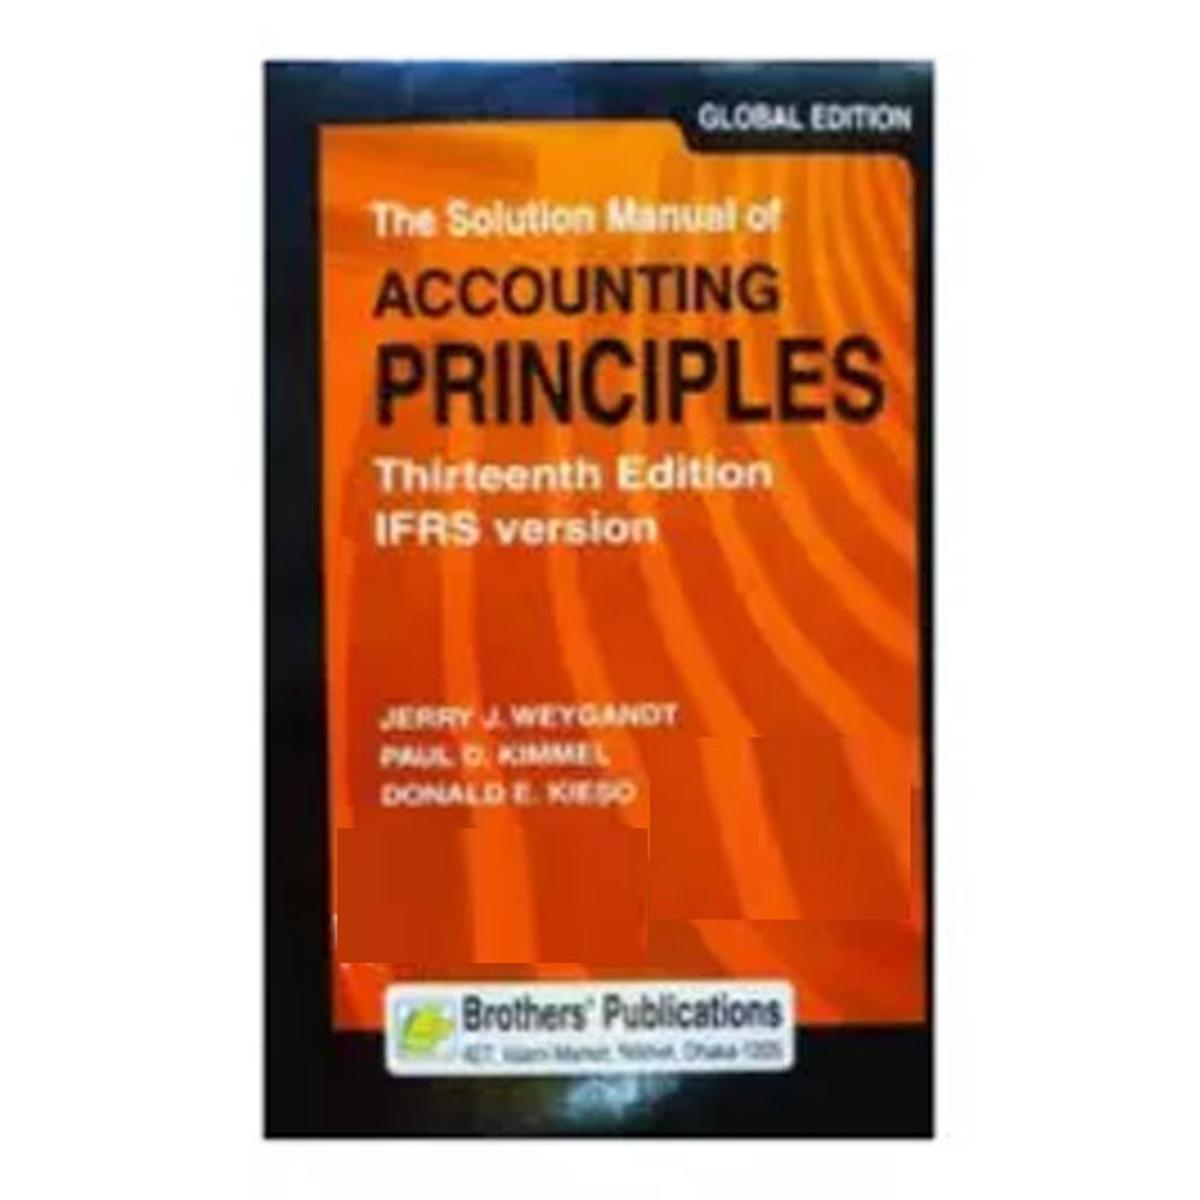 Accounting Principles (Thirteenth Edition), IFRS Version(Solution Manual) by Kieso & Kimmel